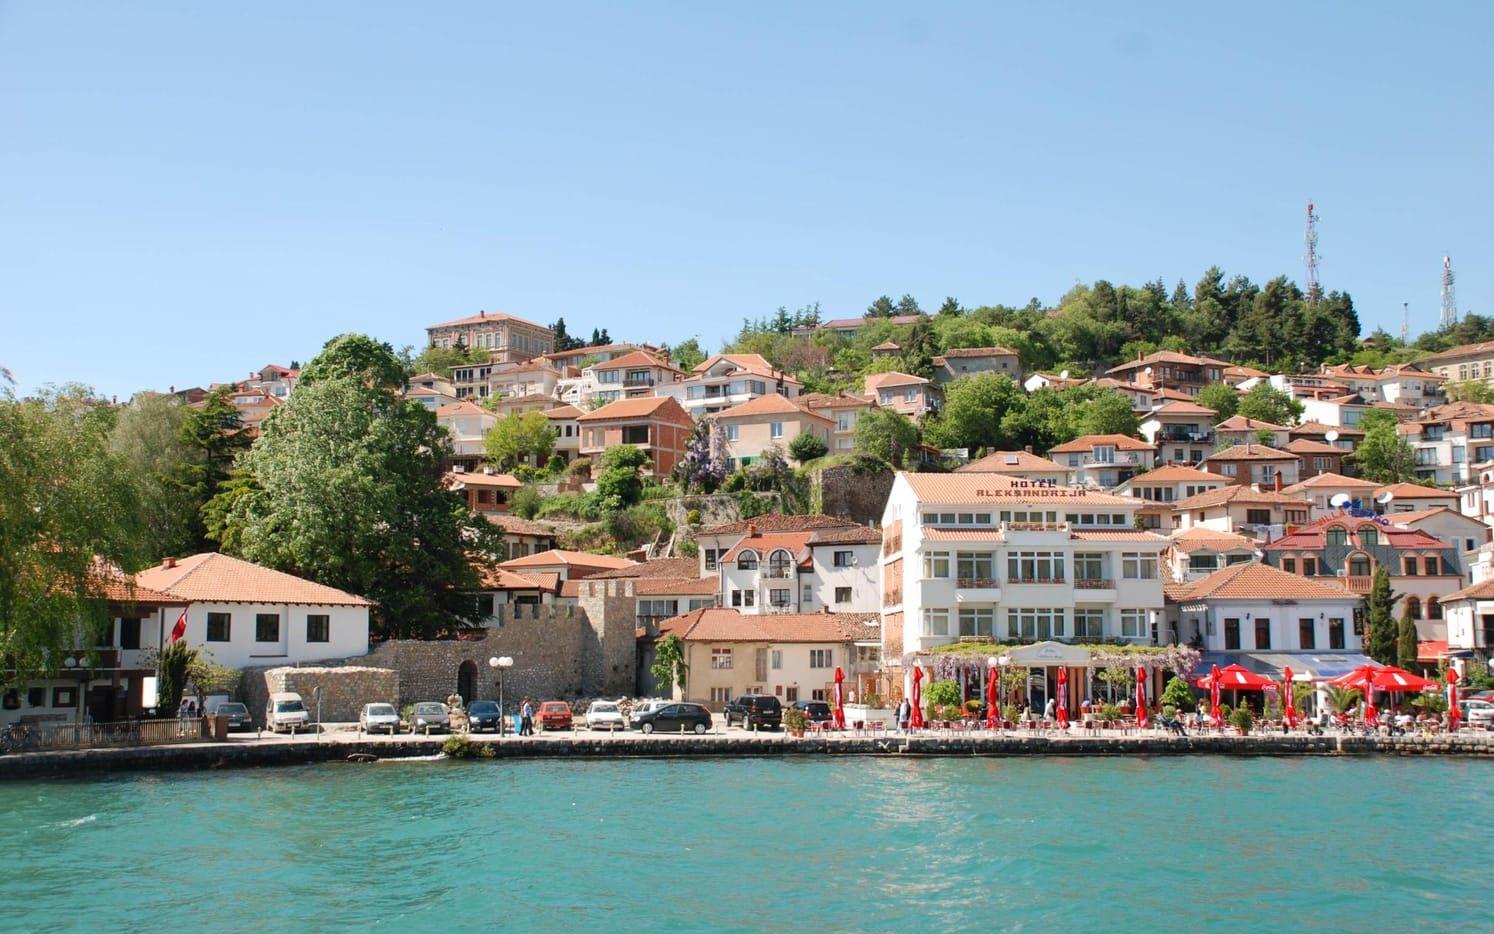 På femte plats: Ohrid! Bild: Wikimedia Commons